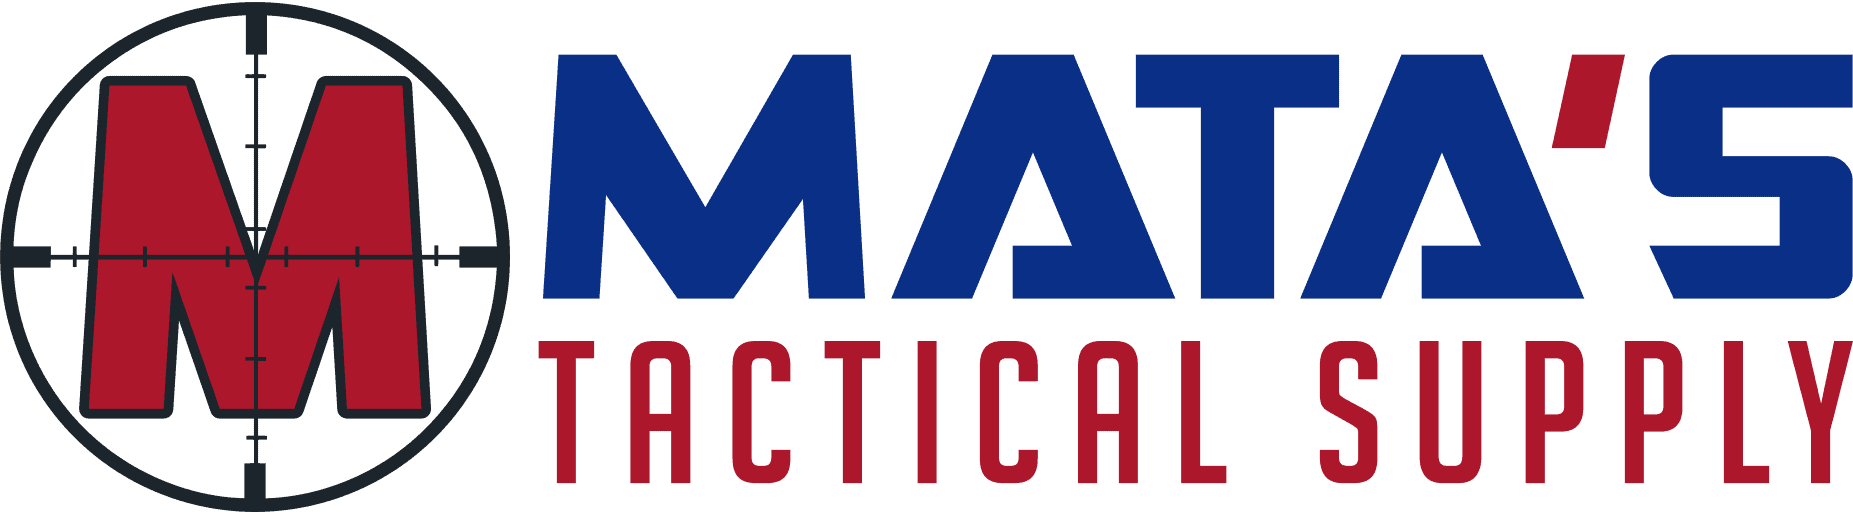 Mata’s Tactical Supply